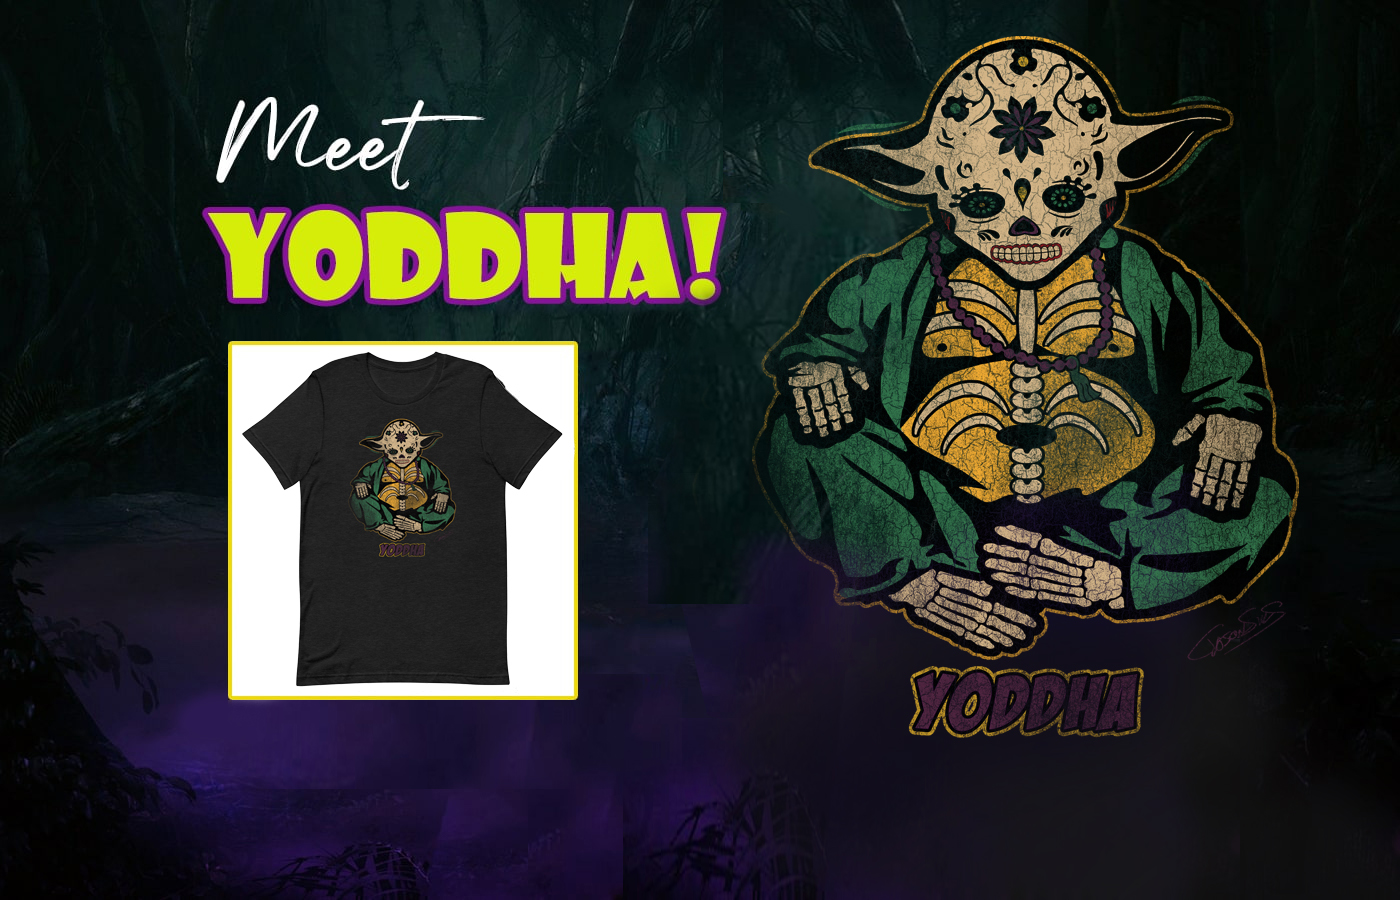 Meet Yoddha!